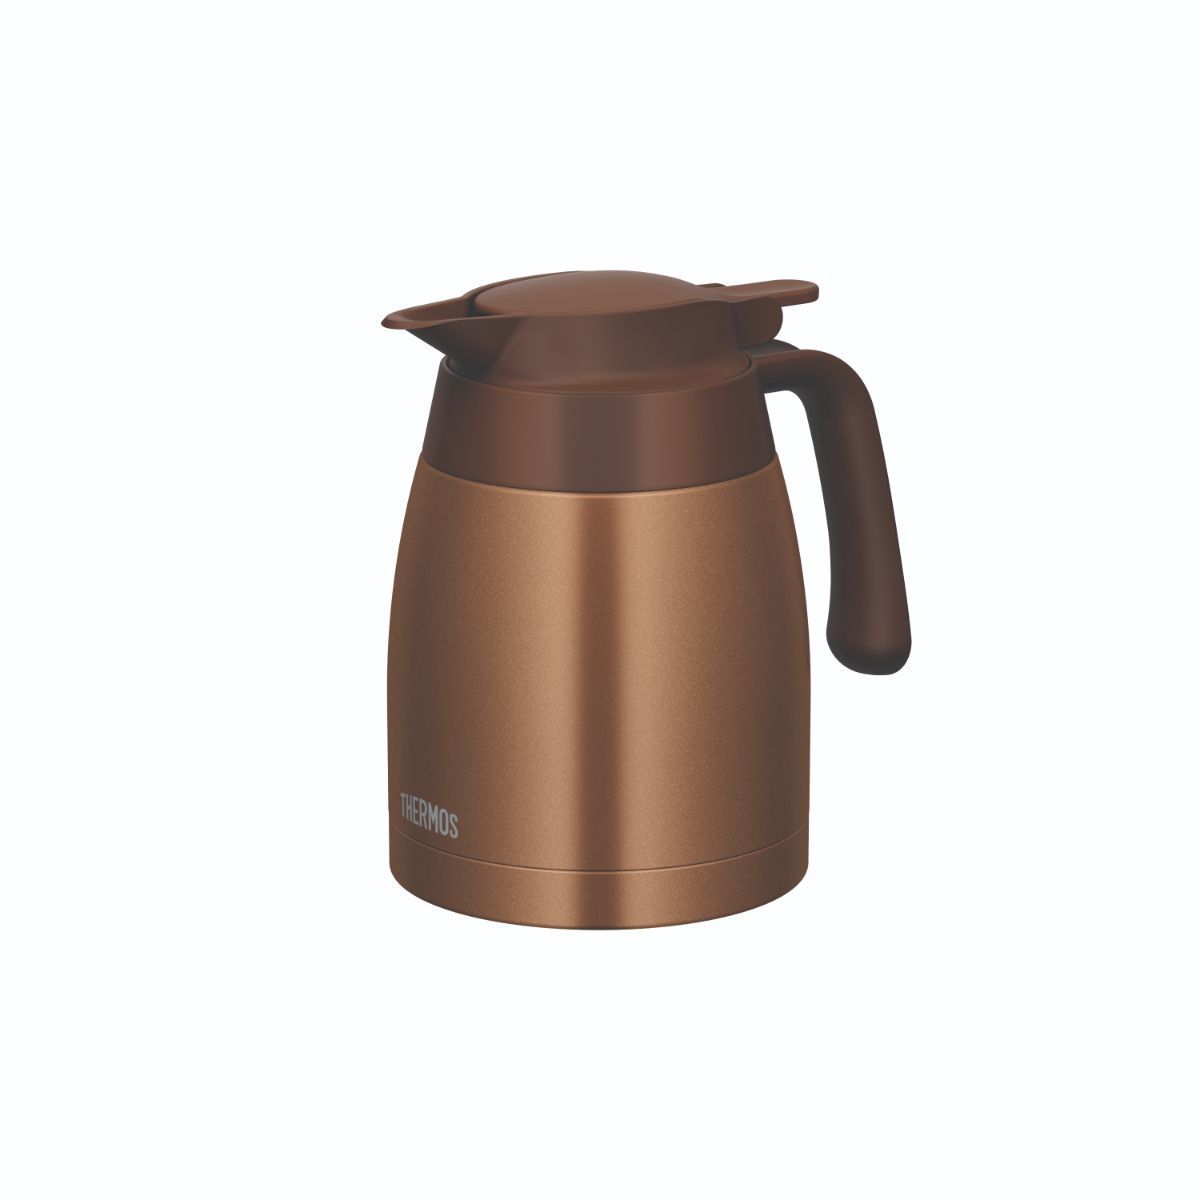 THERMOS ステンレスポット ブラウンゴールド 1L ステンレス 保温 保冷 丸洗イ可 軽量 コンパクト オ茶 コーヒー